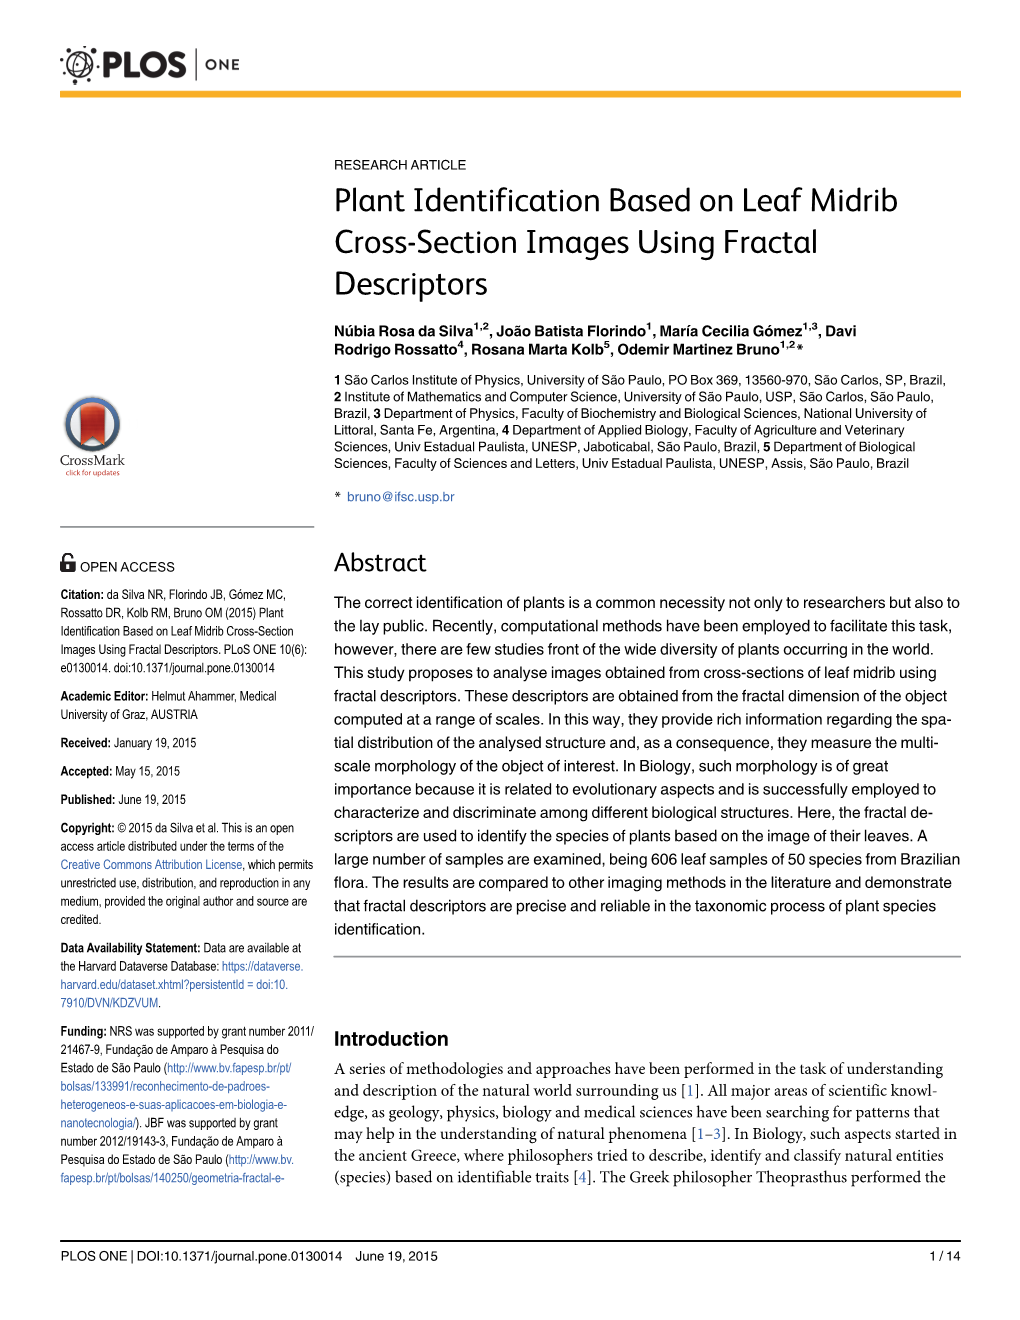 Plant Identification Based on Leaf Midrib Cross-Section Images Using Fractal Descriptors